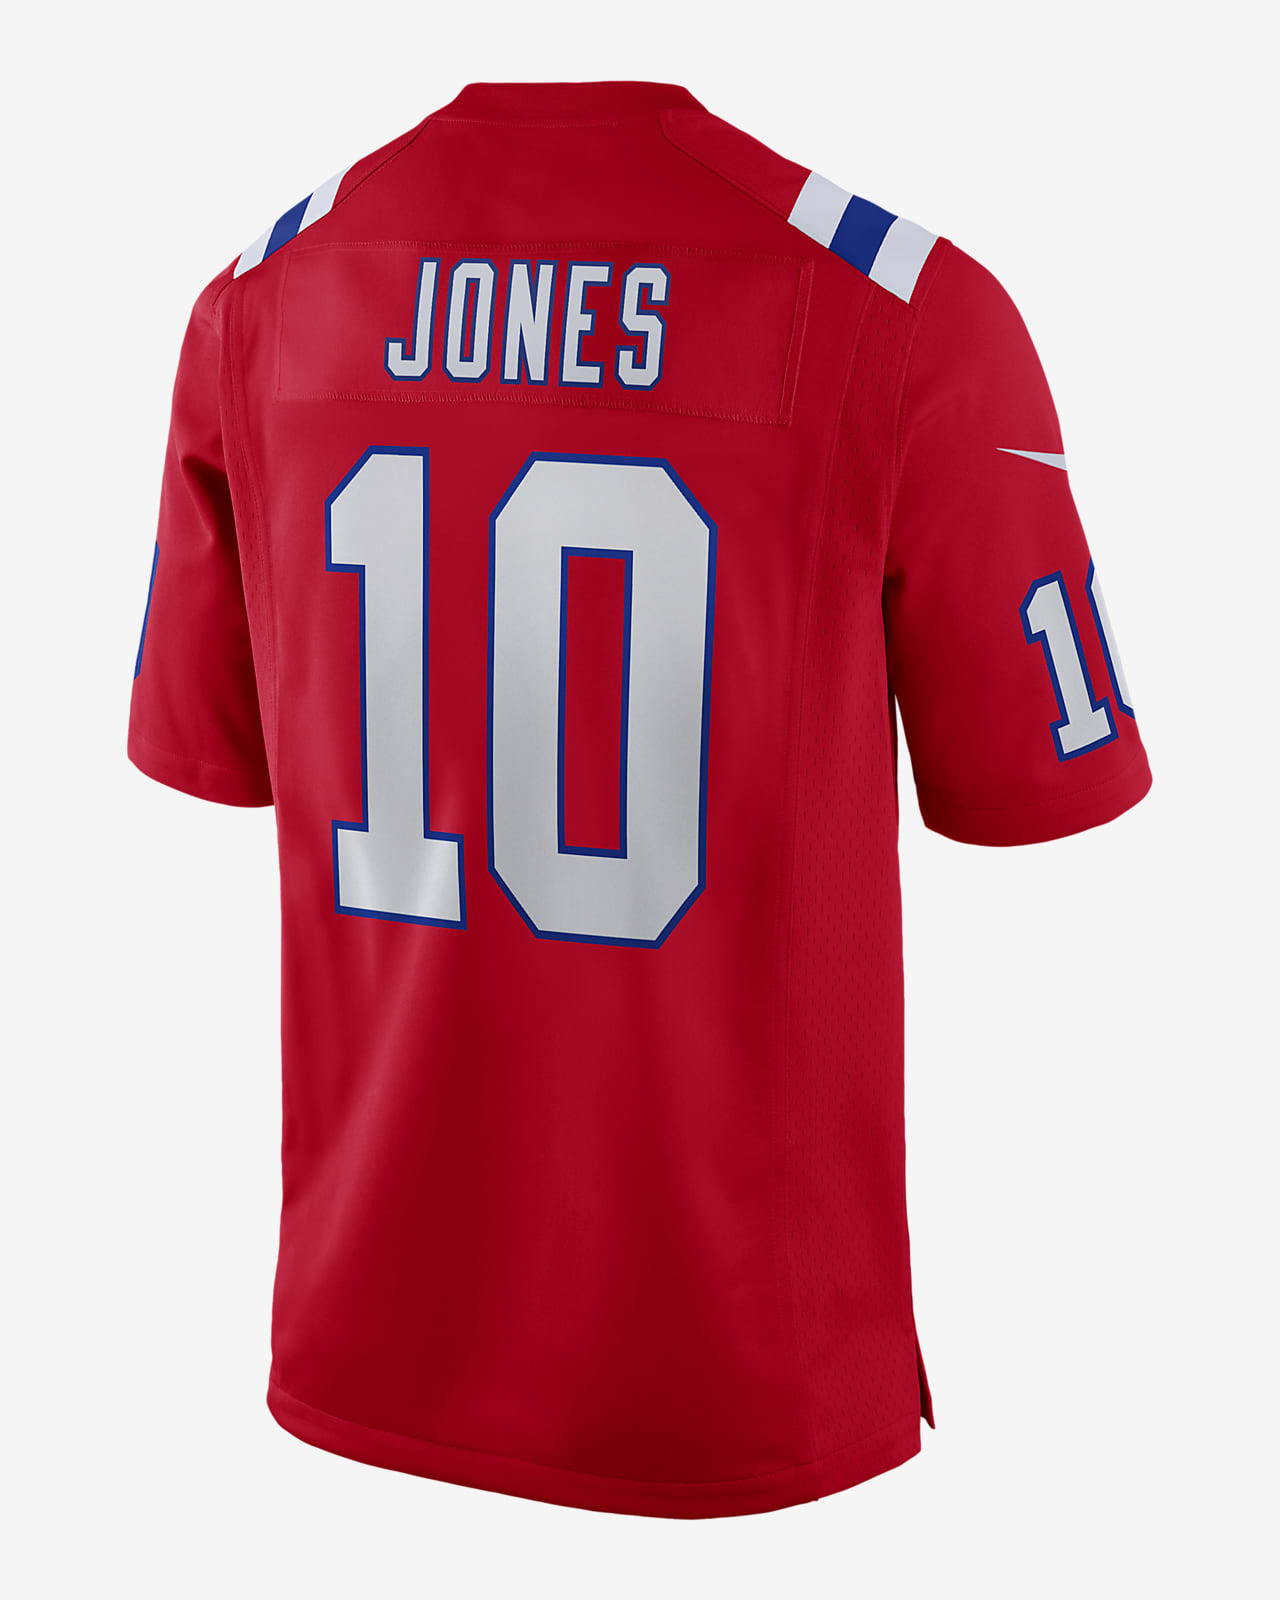 NFL New England Patriots (Mac Jones) Men's Game Football Jersey.